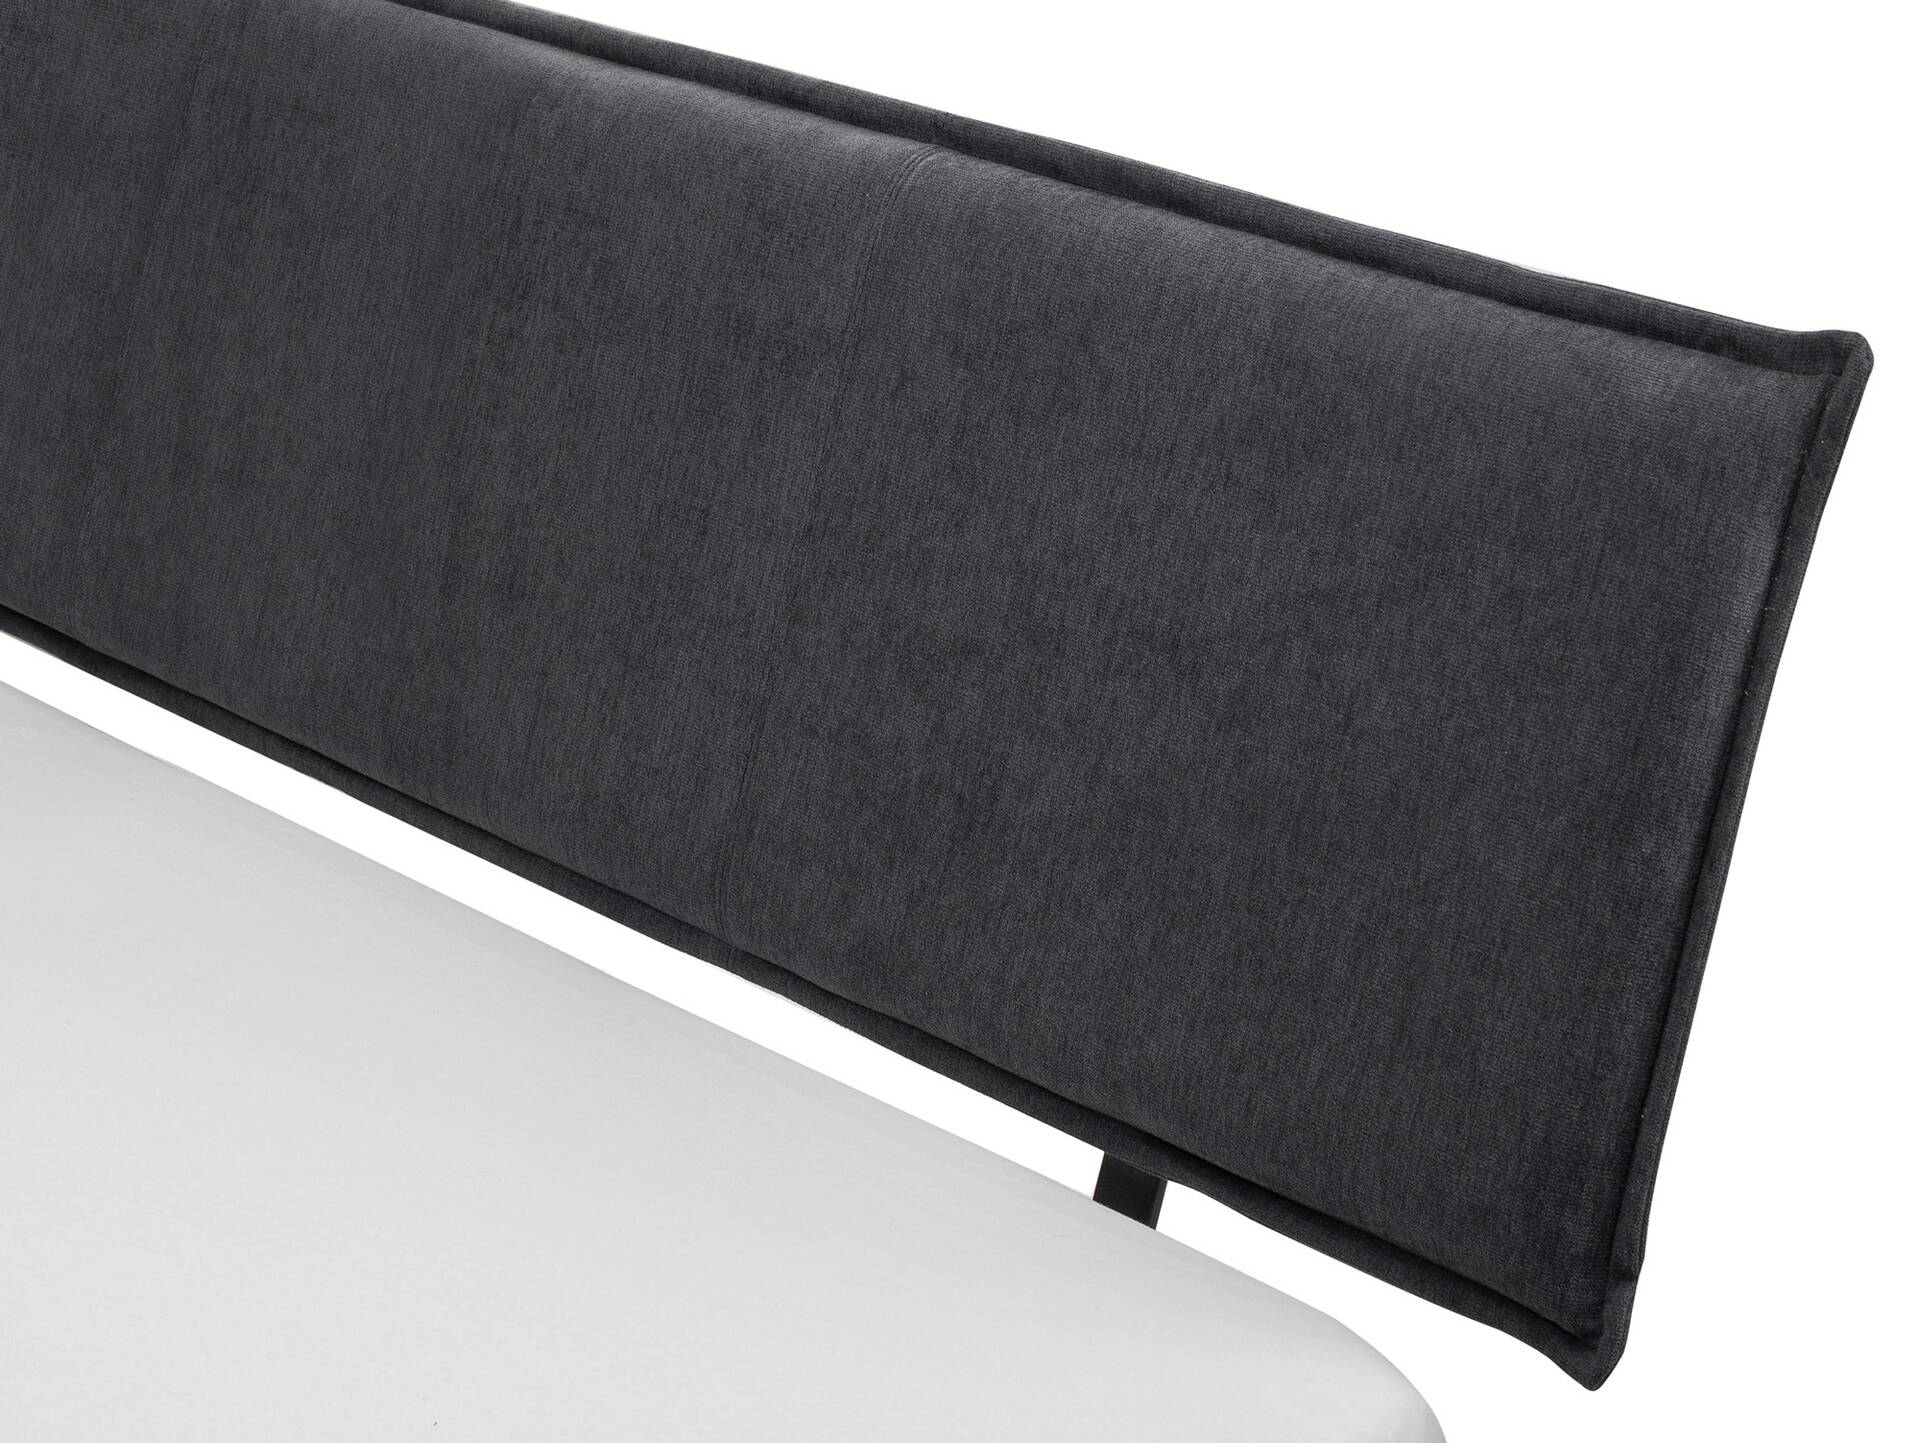 CALIDO 4-Fuß-Bett mit Polster-Kopfteil, Material Massivholz 120 x 200 cm | Buche weiss lackiert | Stoff Anthrazit | Standardhöhe